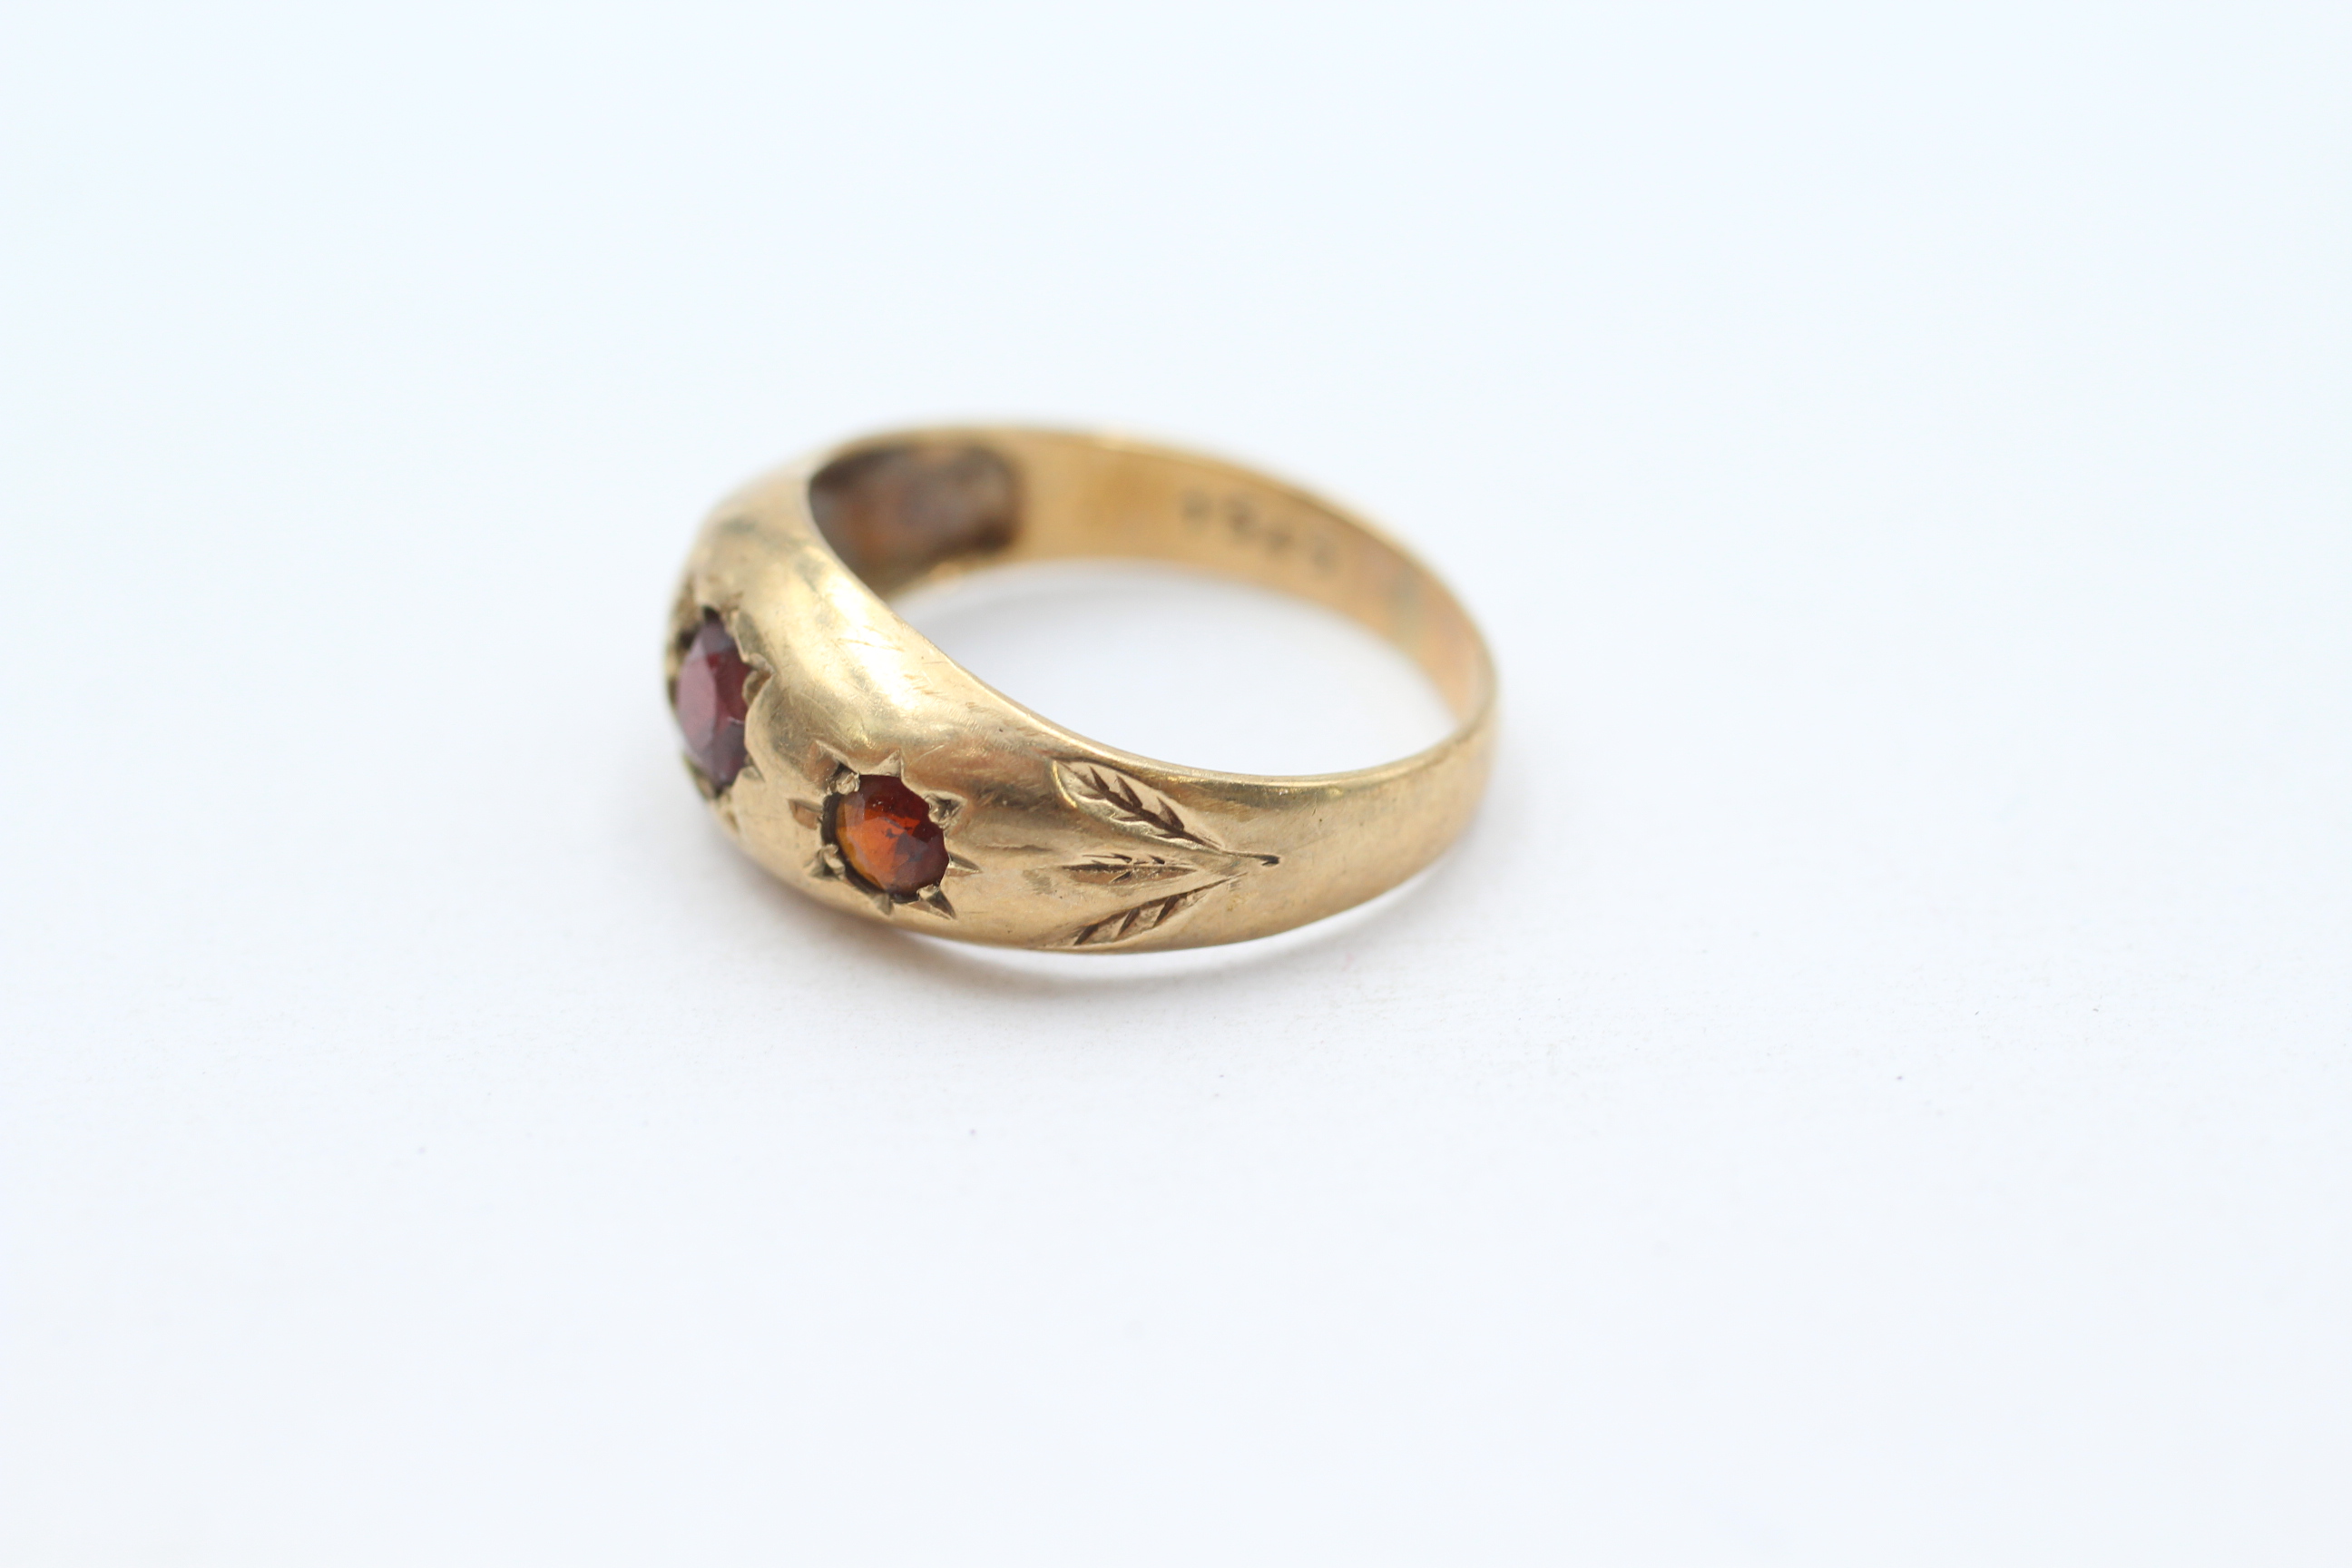 9ct gold antique garnet three stone ring with starburst motif Size M - 2.5 g - Image 4 of 5